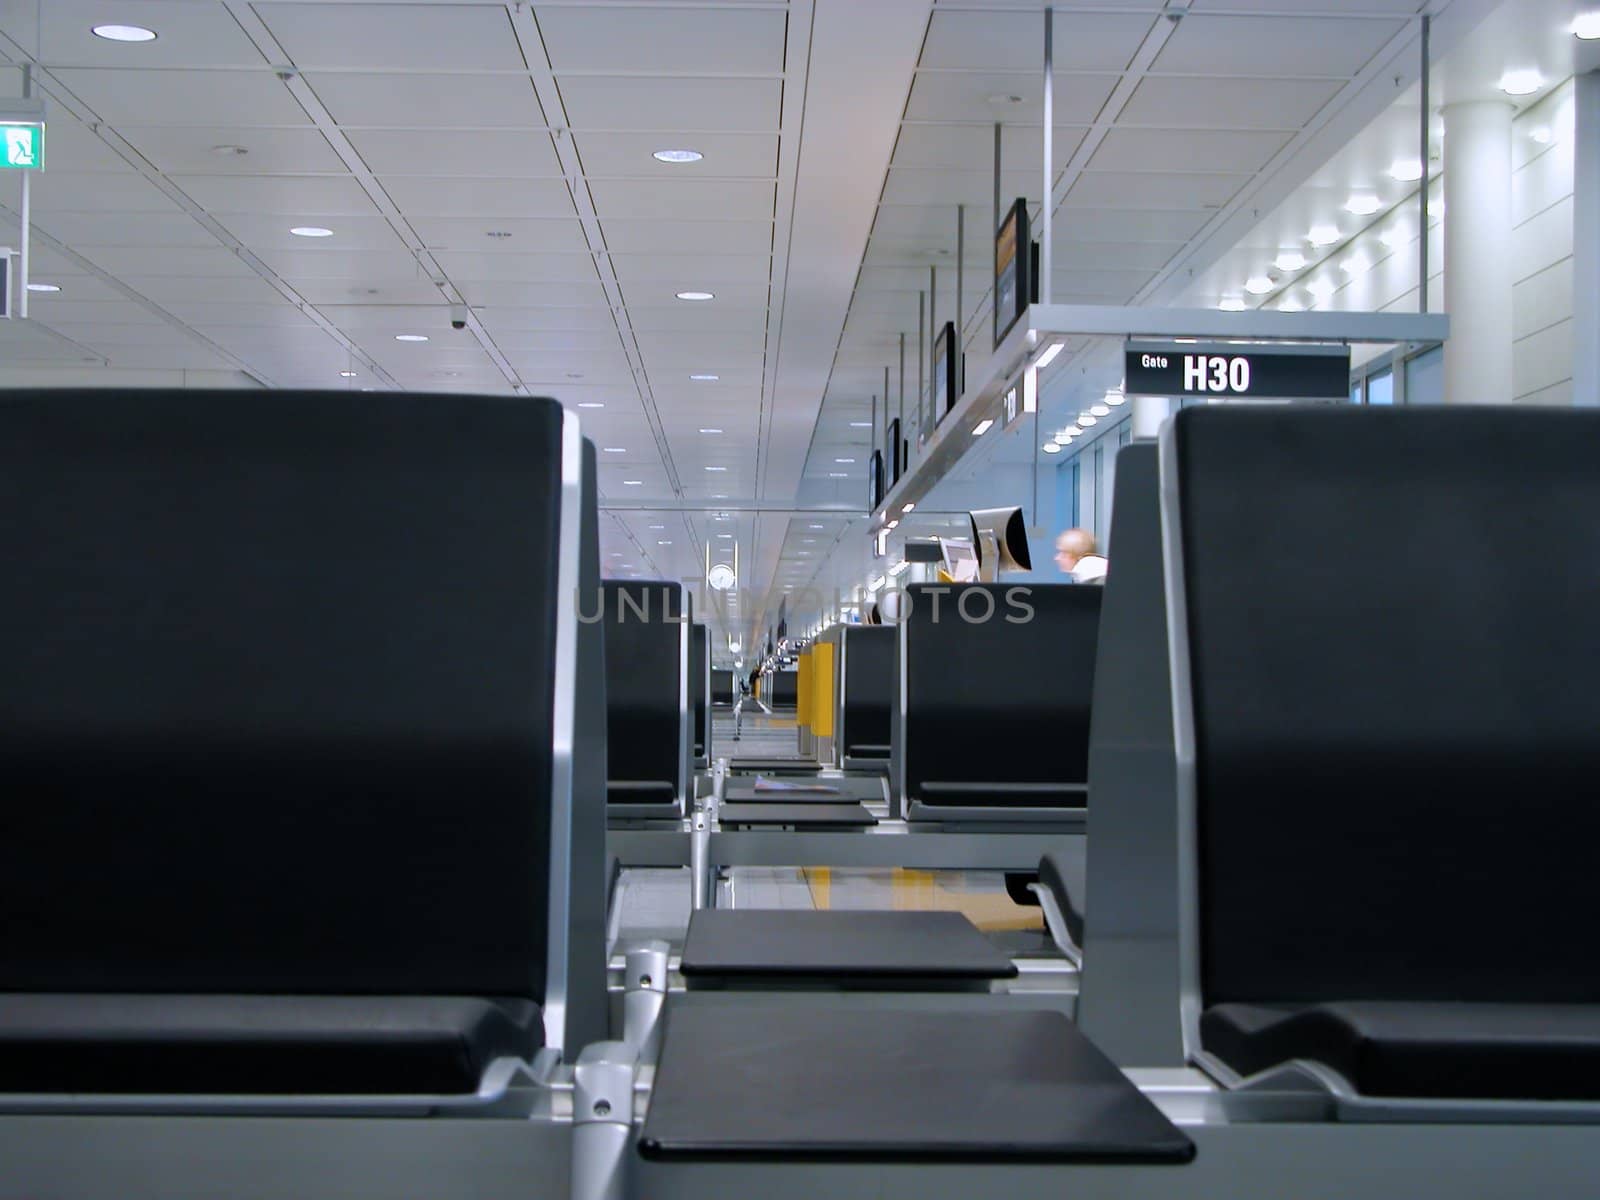 Seats at the airport gates          